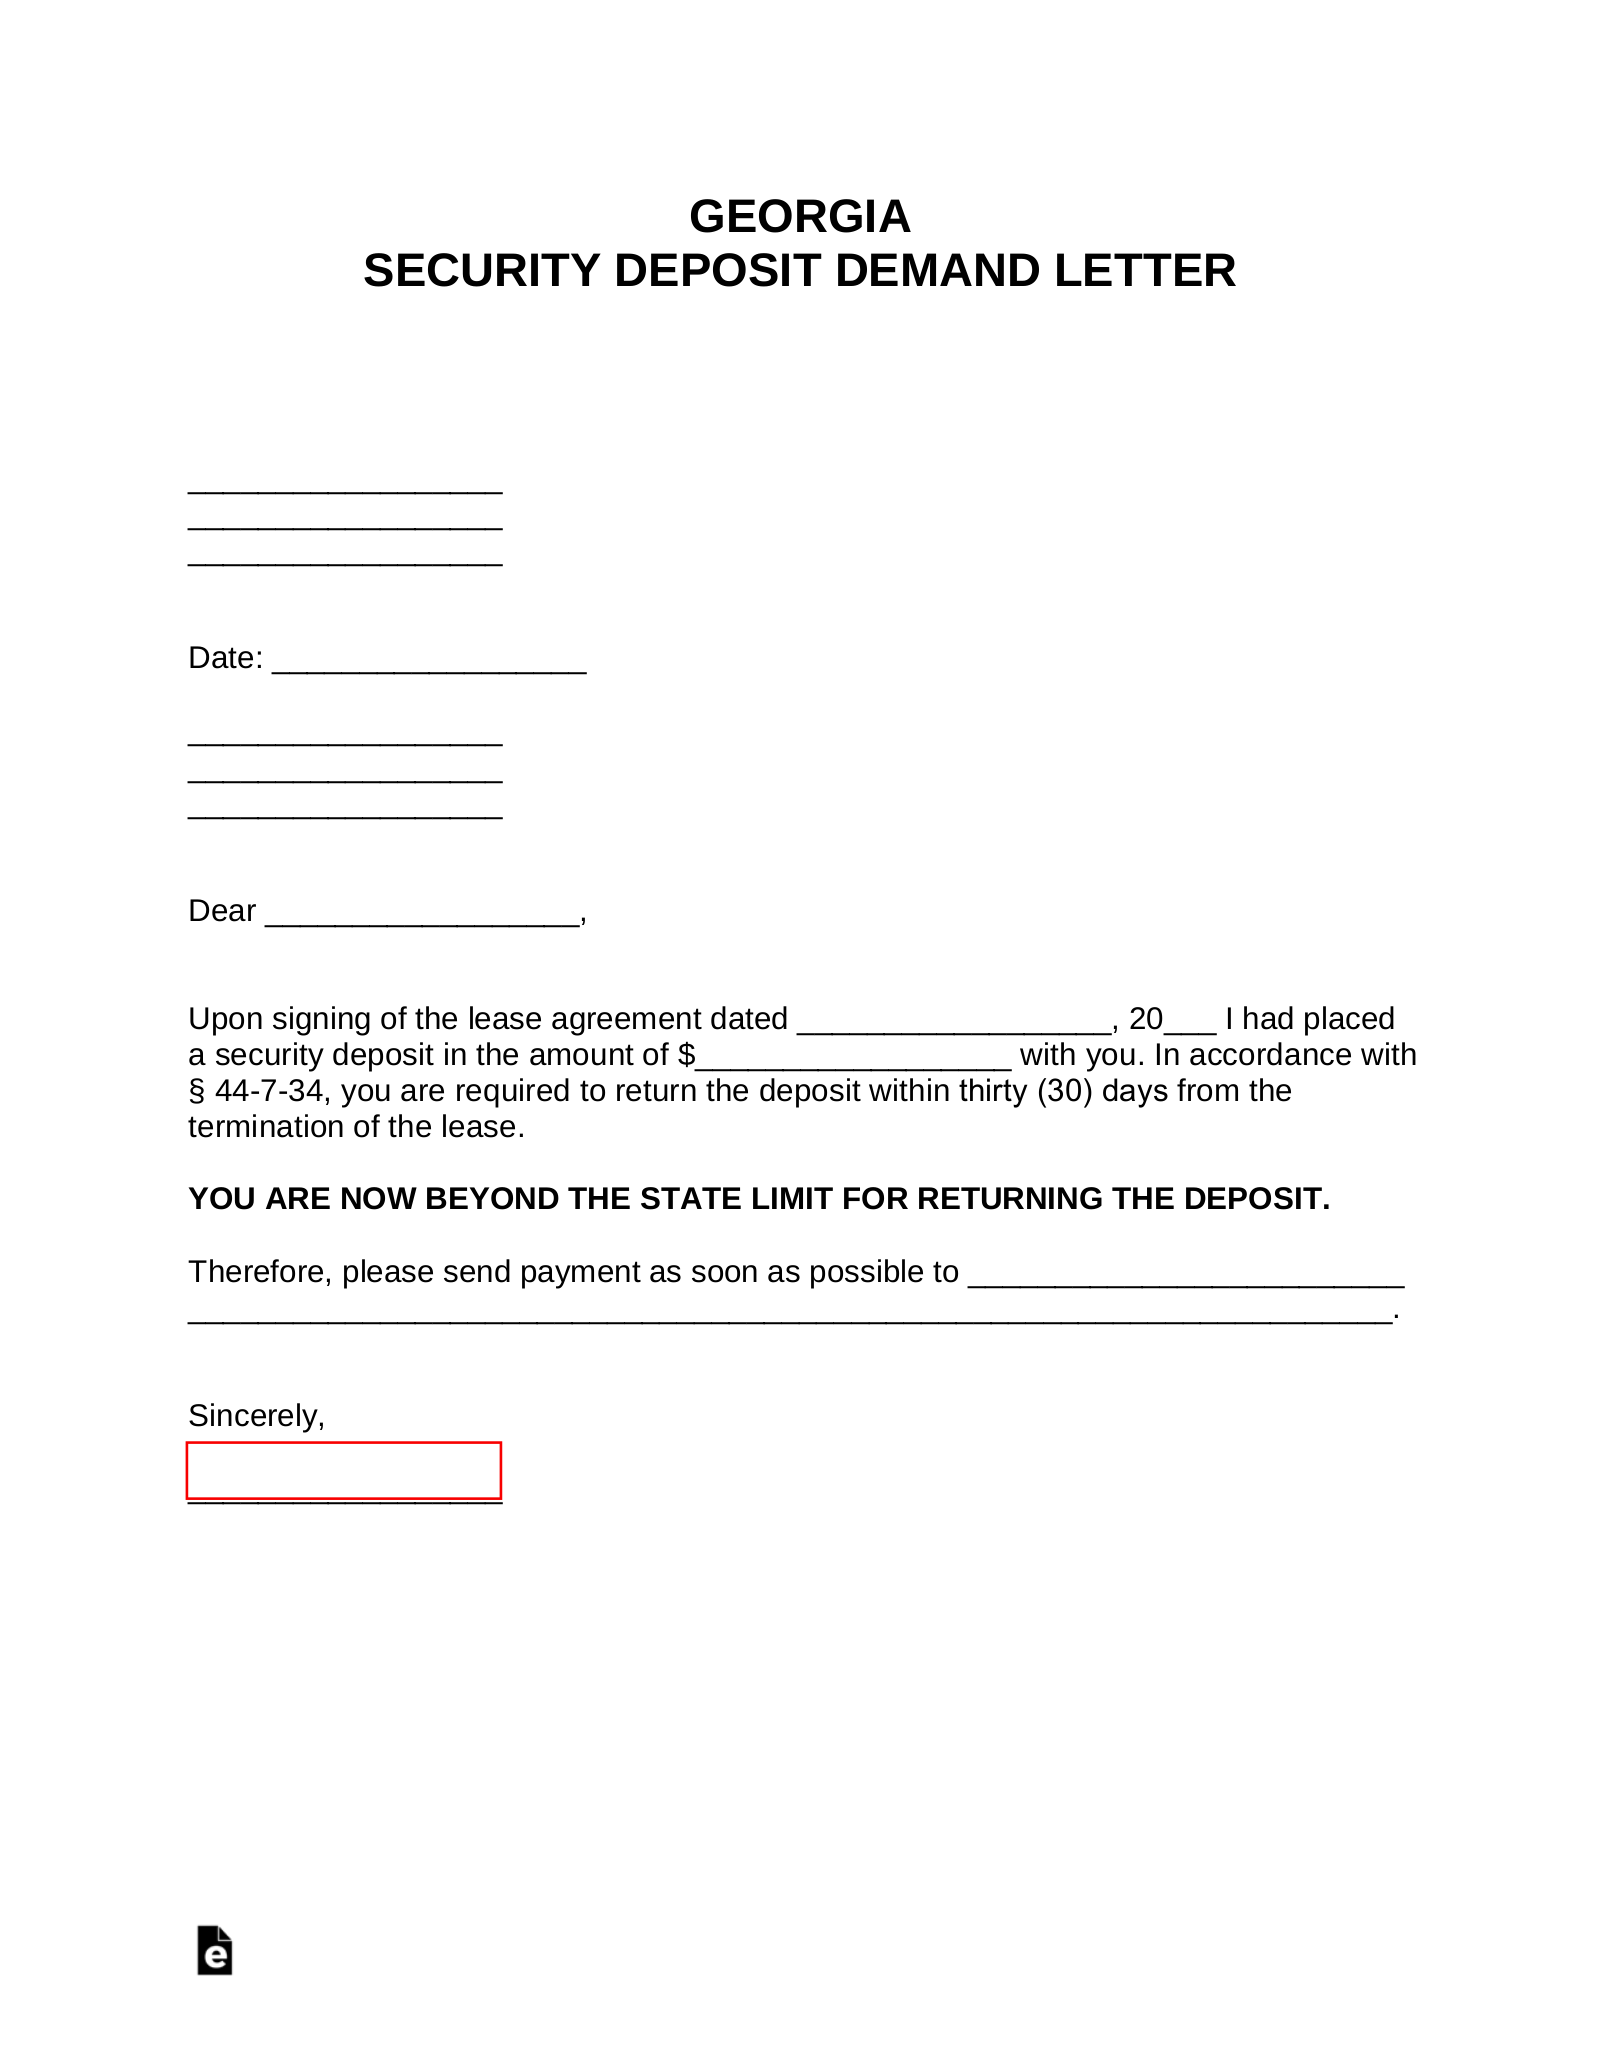 Georgia Security Deposit Demand Letter